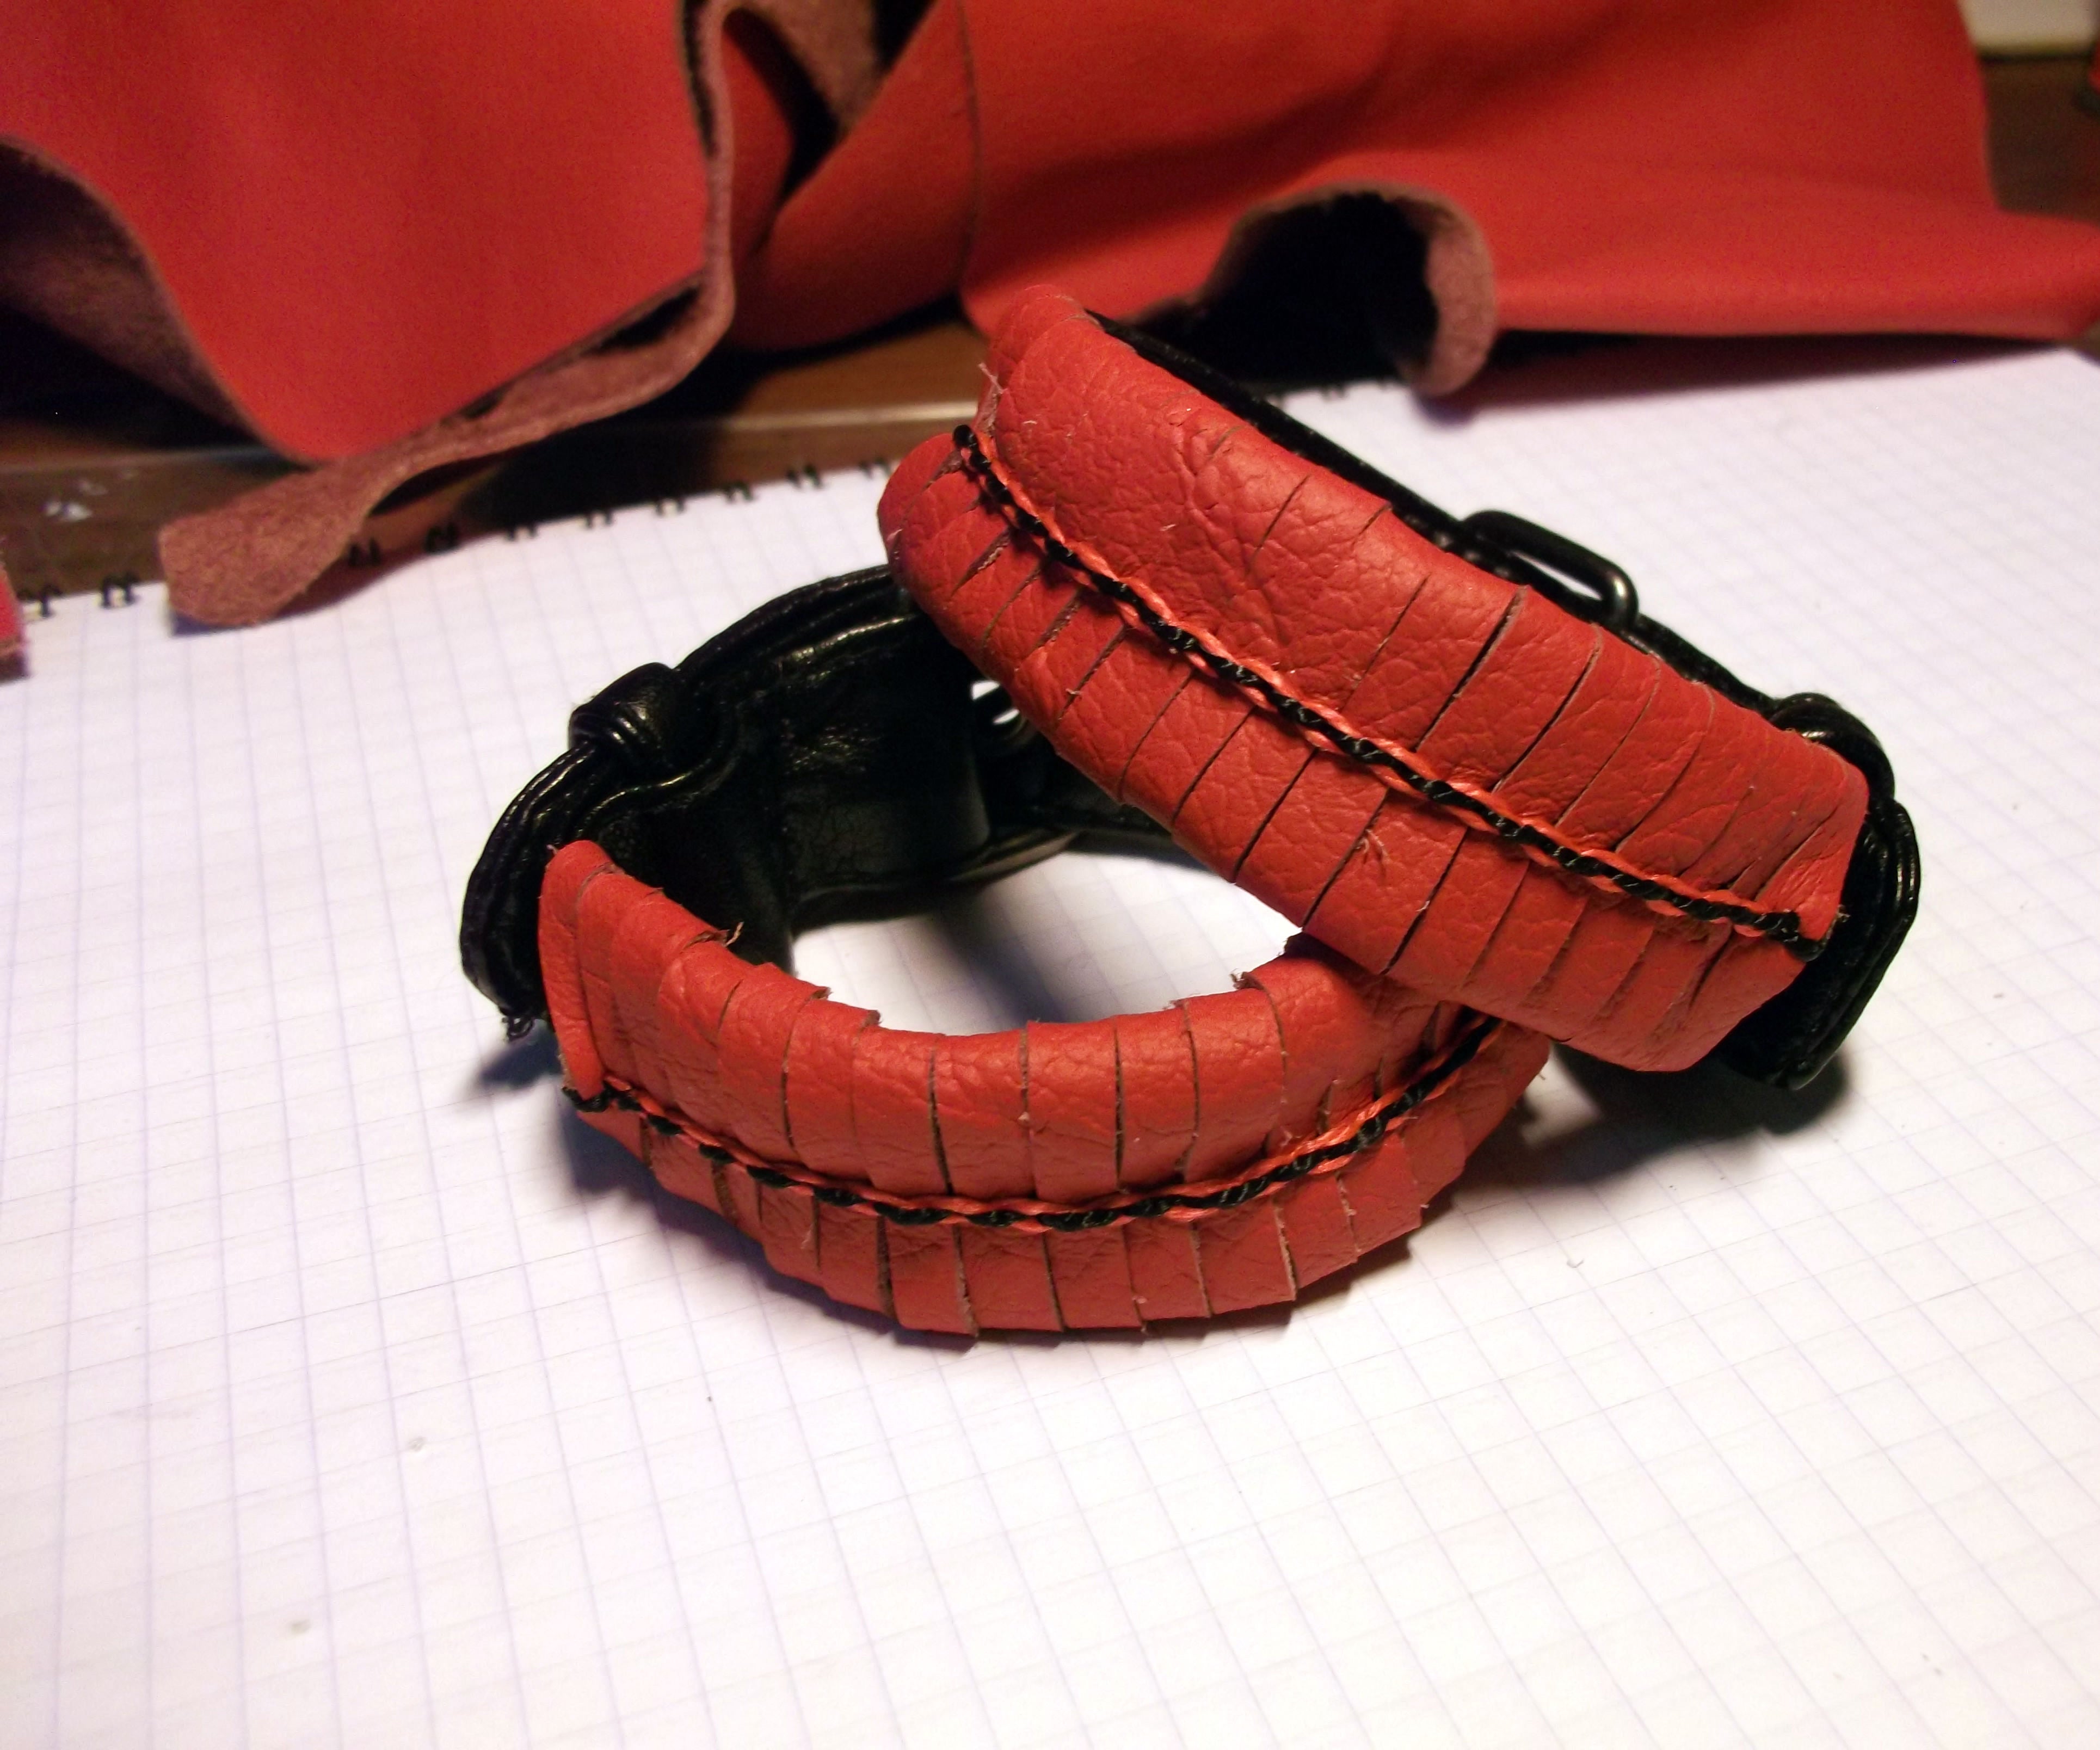 A Bracelets From Old Leather Jacket